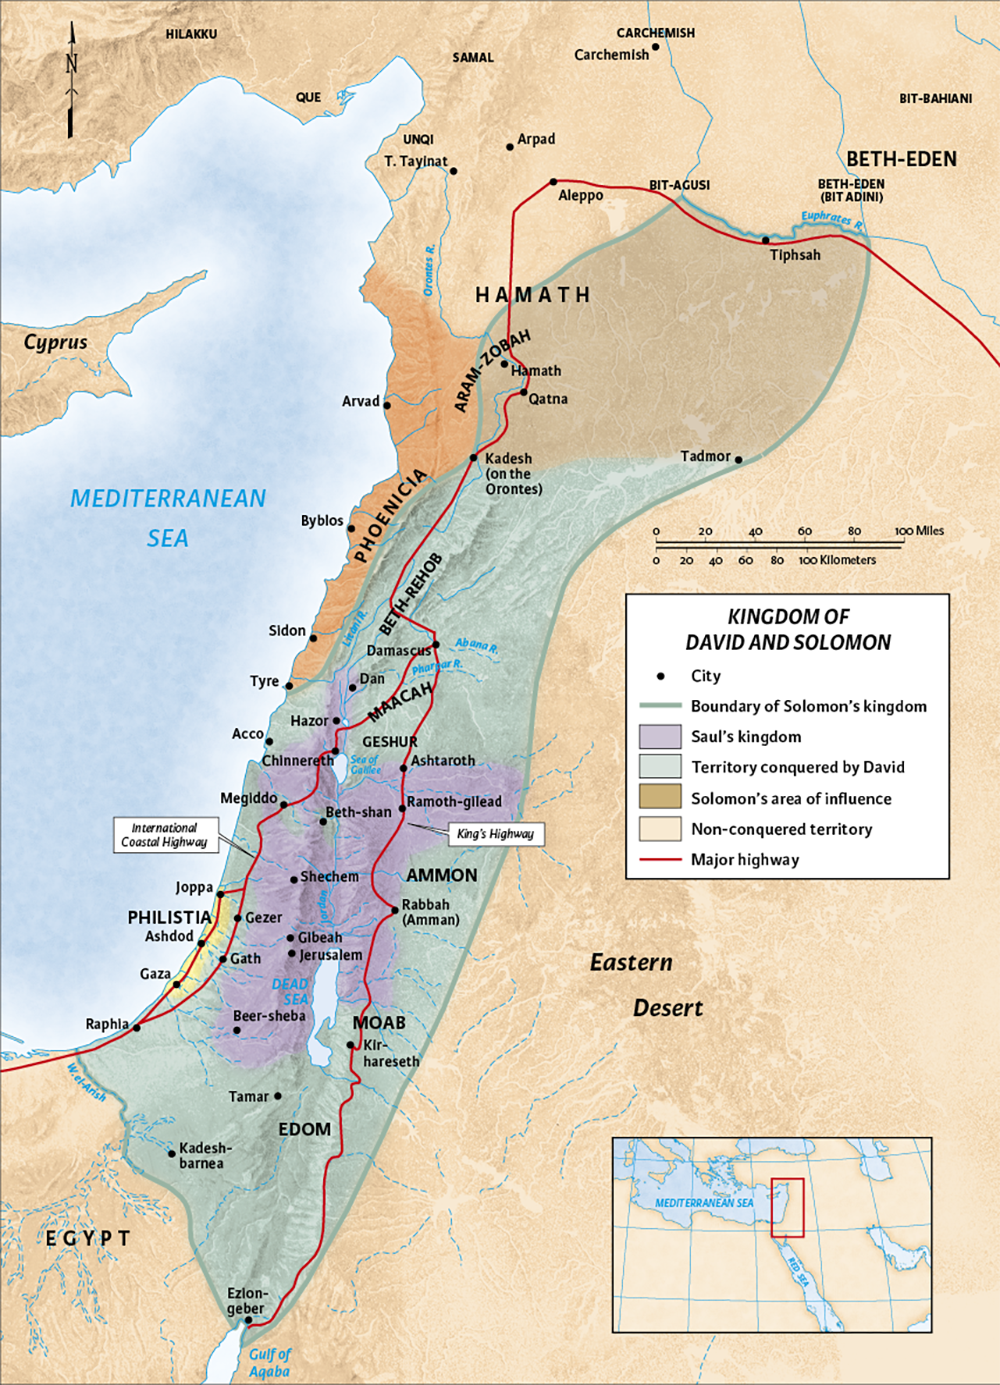 Map of Kingdom of David and Solomon